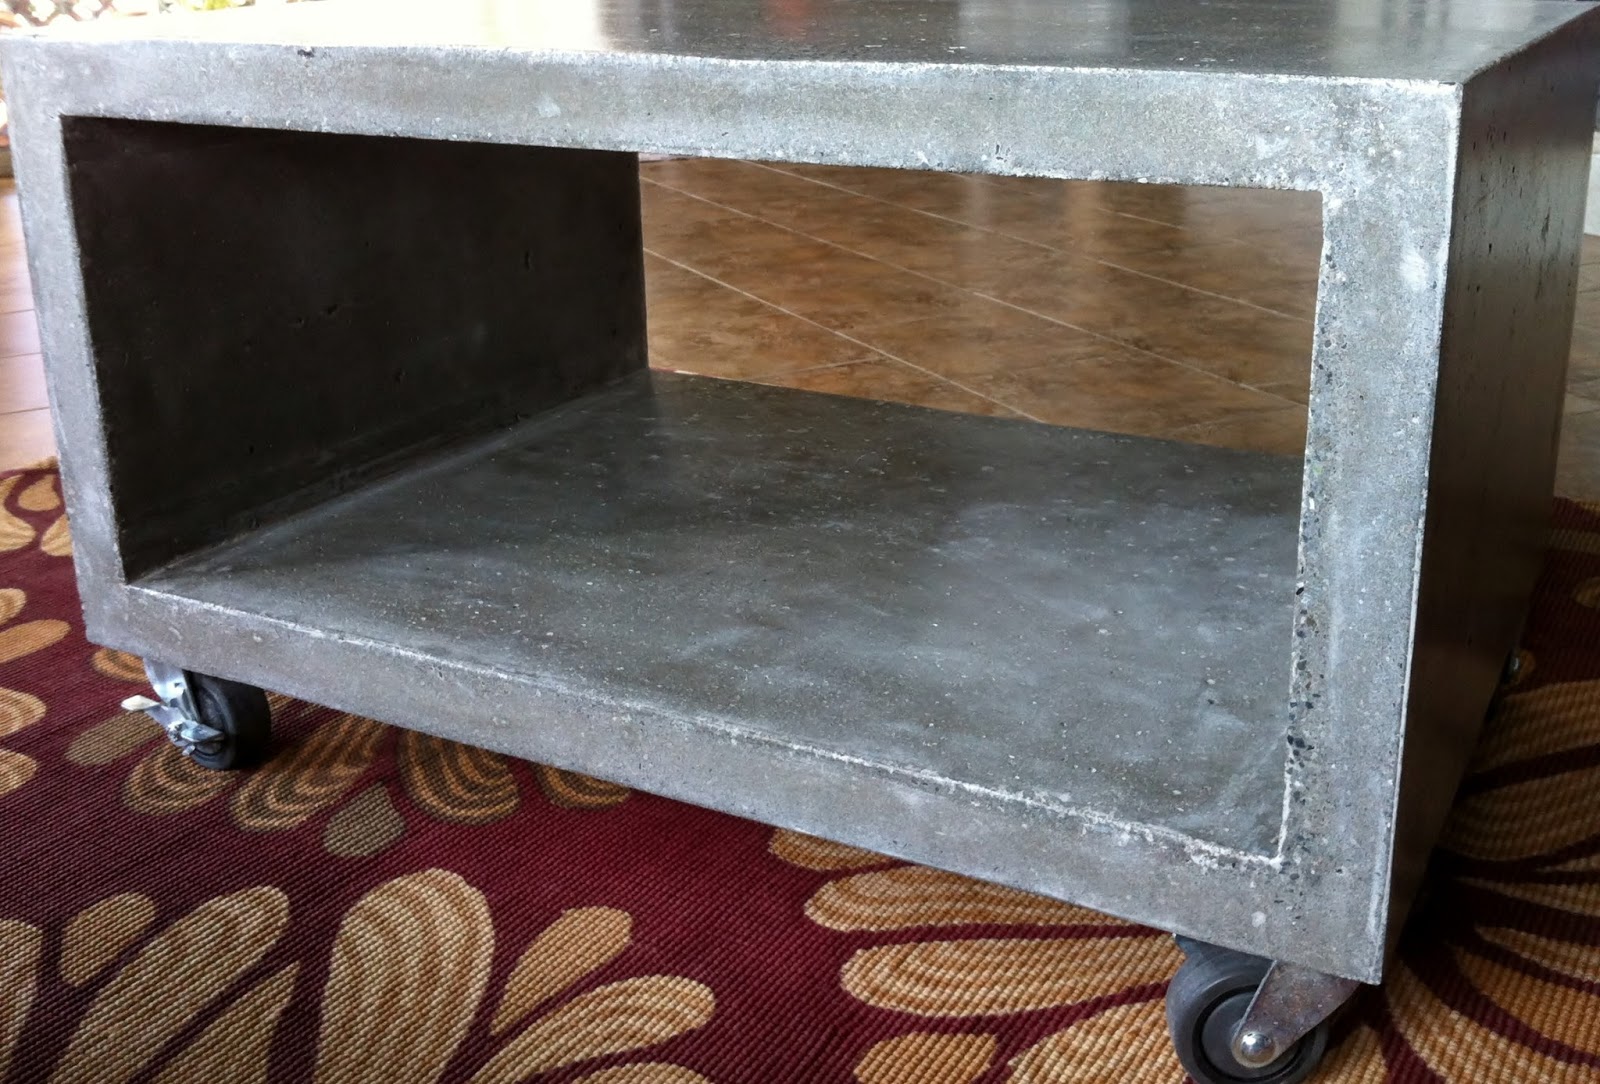 MODE CONCRETE: Heavy Boy Concrete Coffee Table - a modern minimalistic